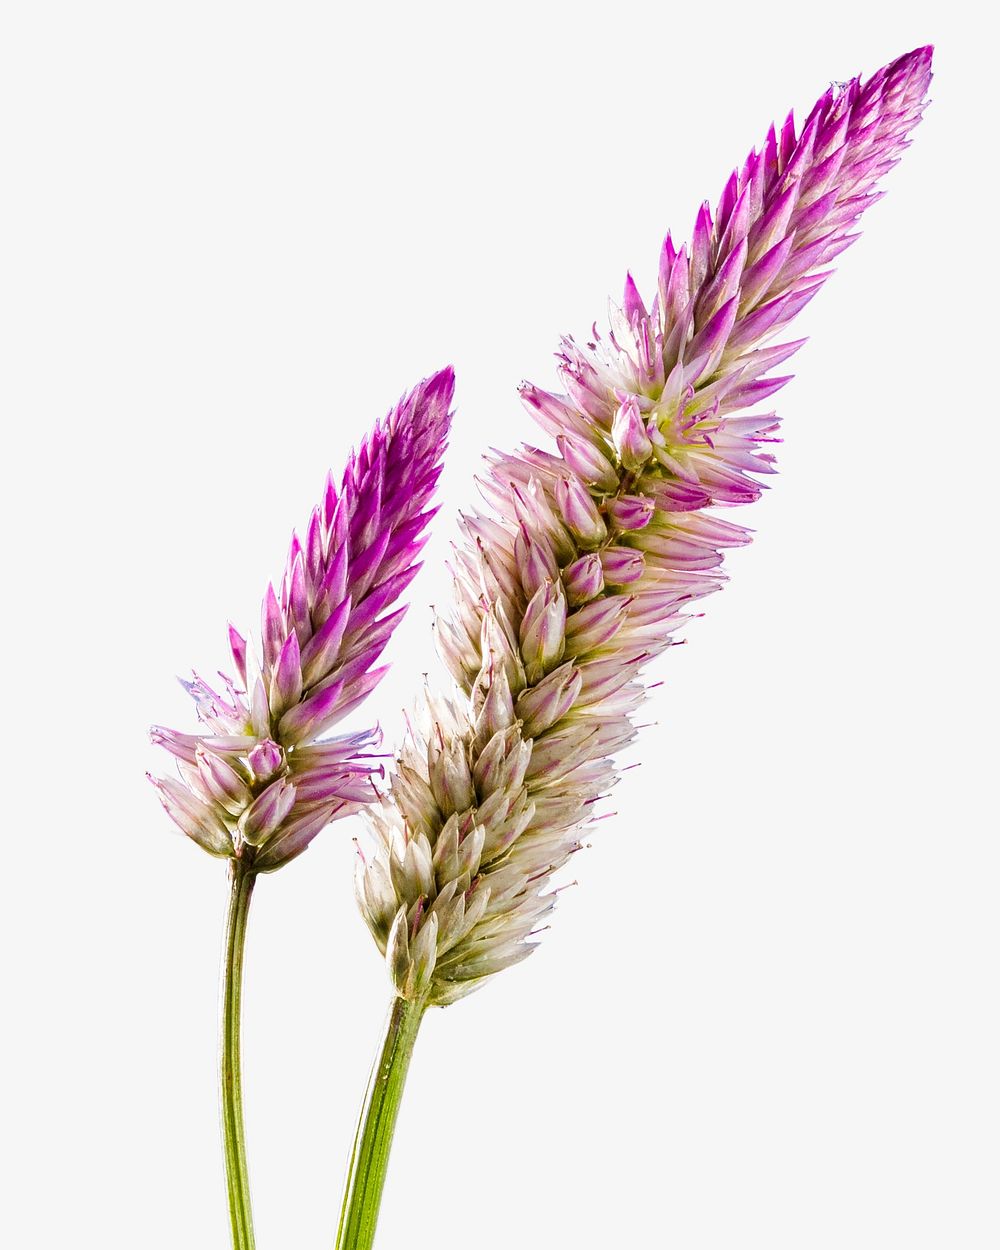 Ptilotus Exaltatus flower collage element, isolated image